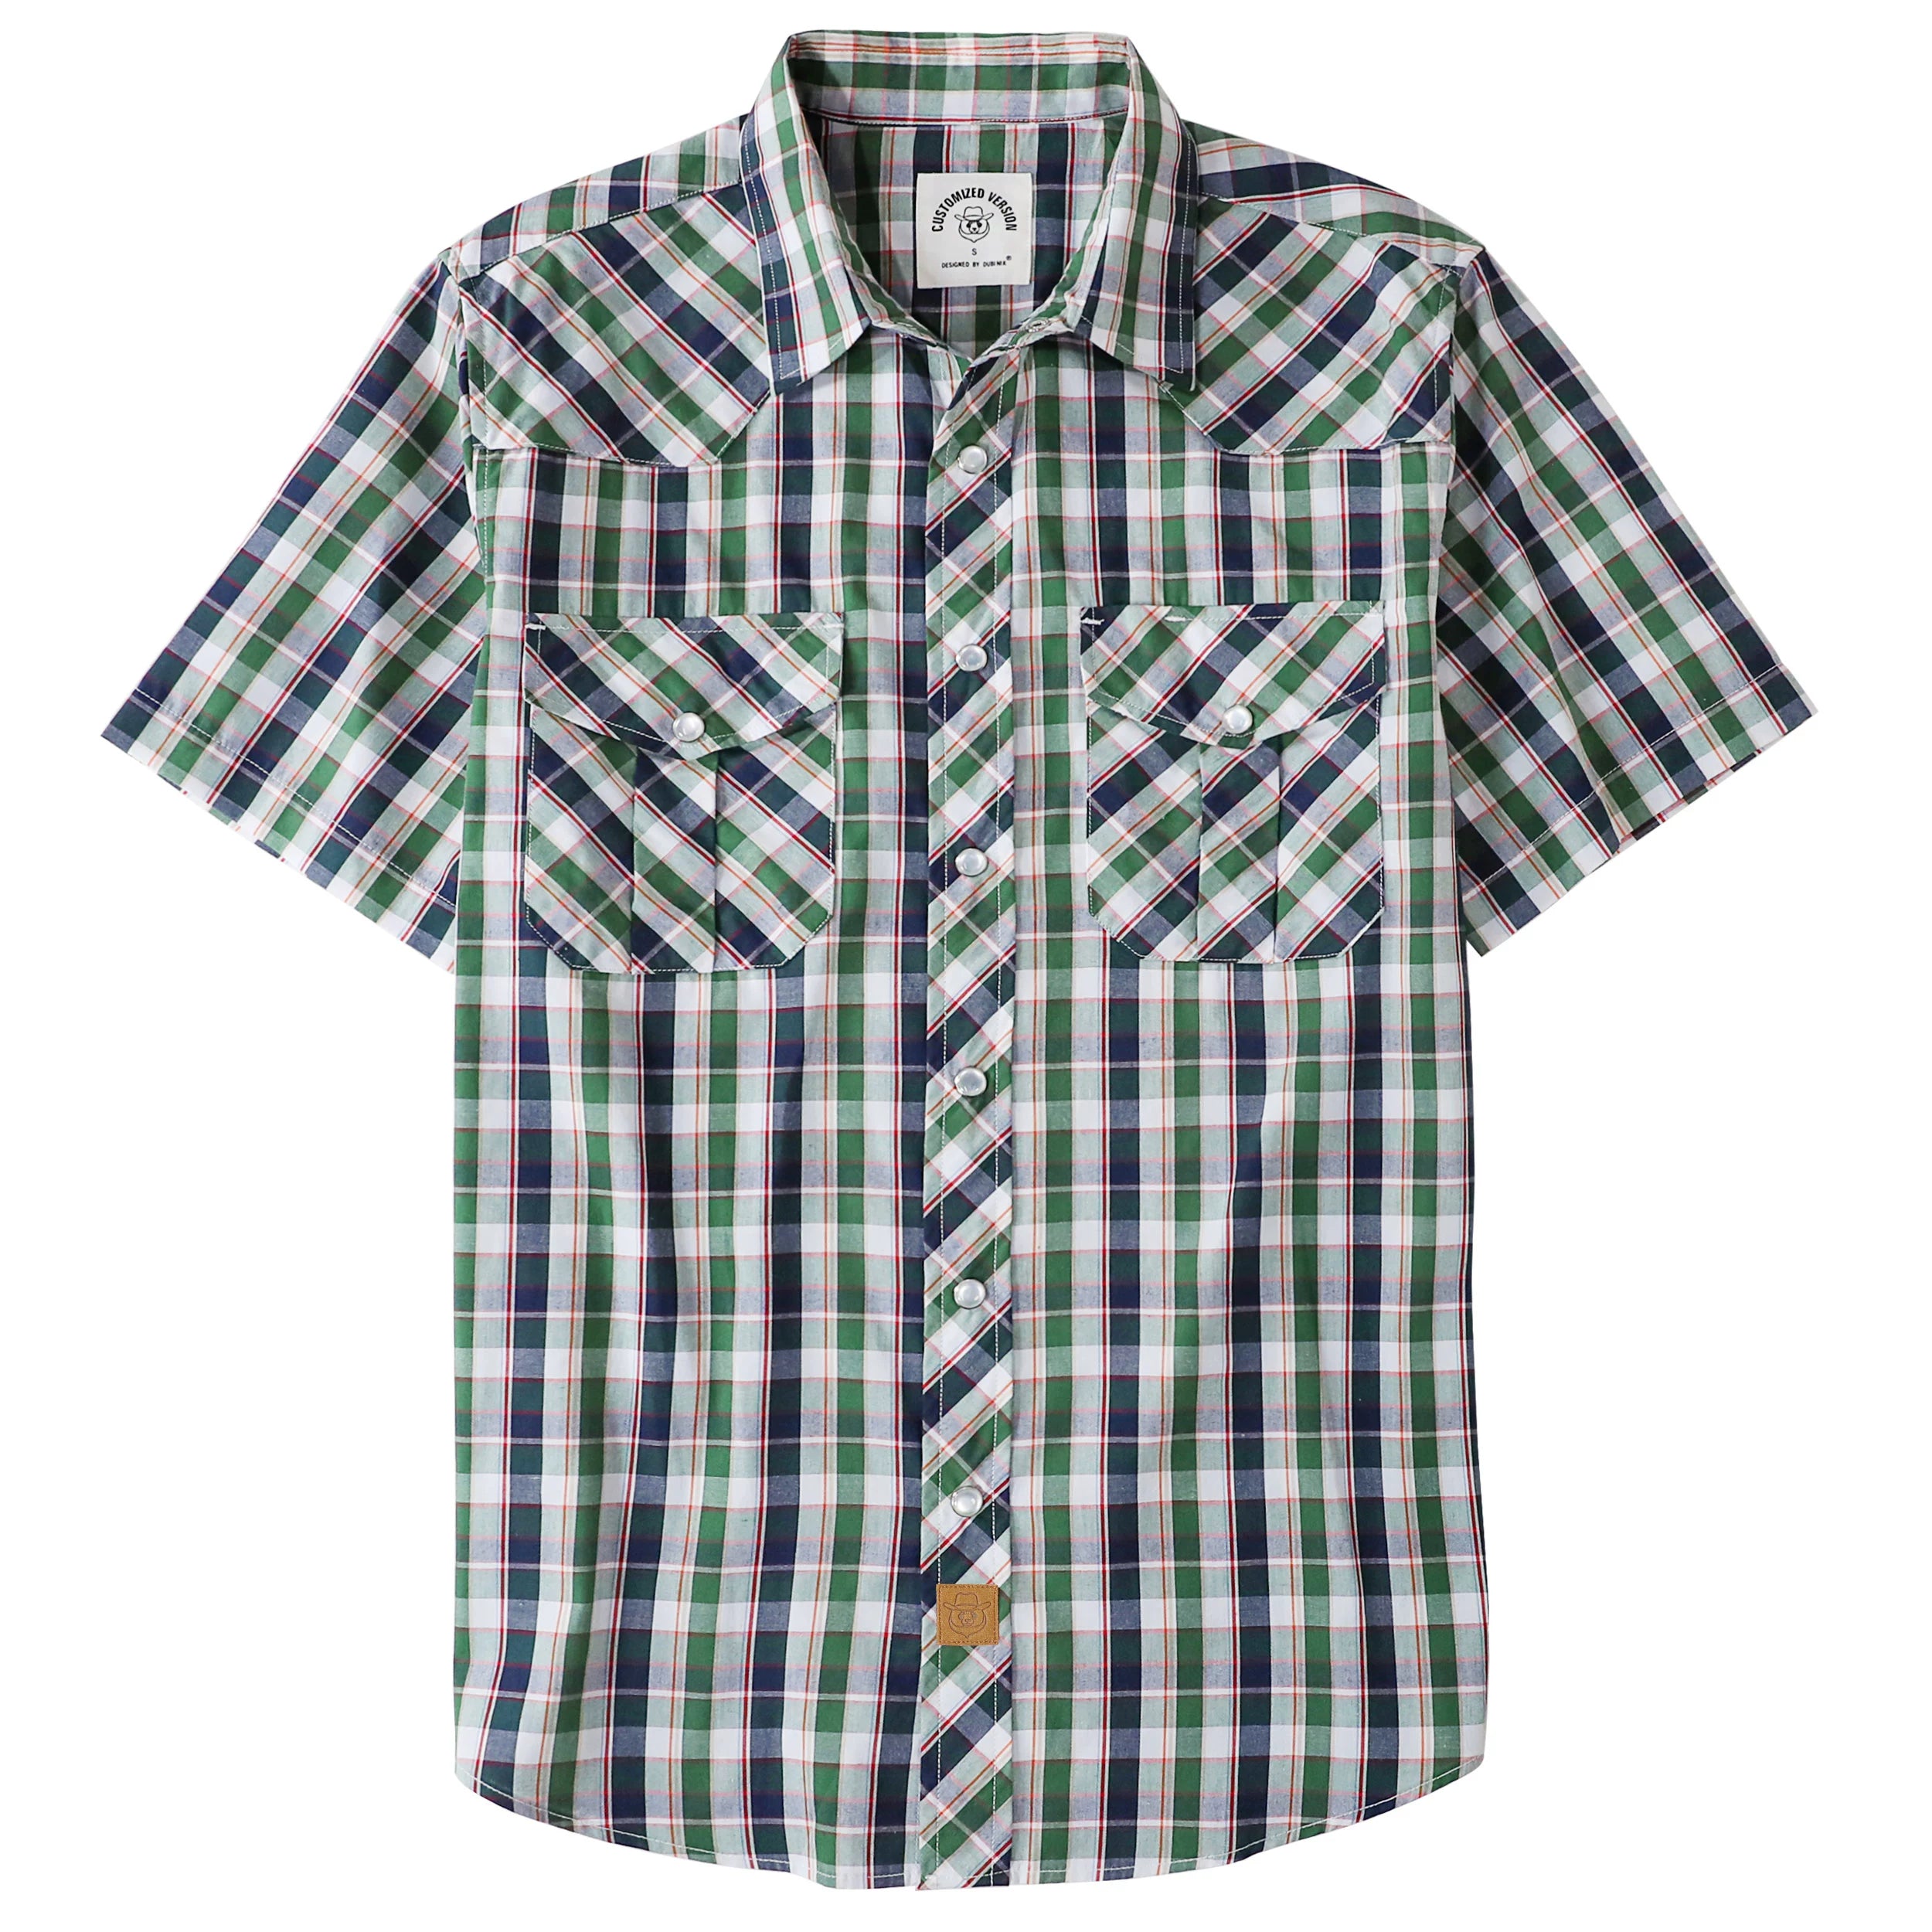 Dubinik® Western Shirts for Men Short Sleeve Plaid Pearl Snap Shirts for Men Button Up Shirt Cowboy Casual Work Shirt#41002